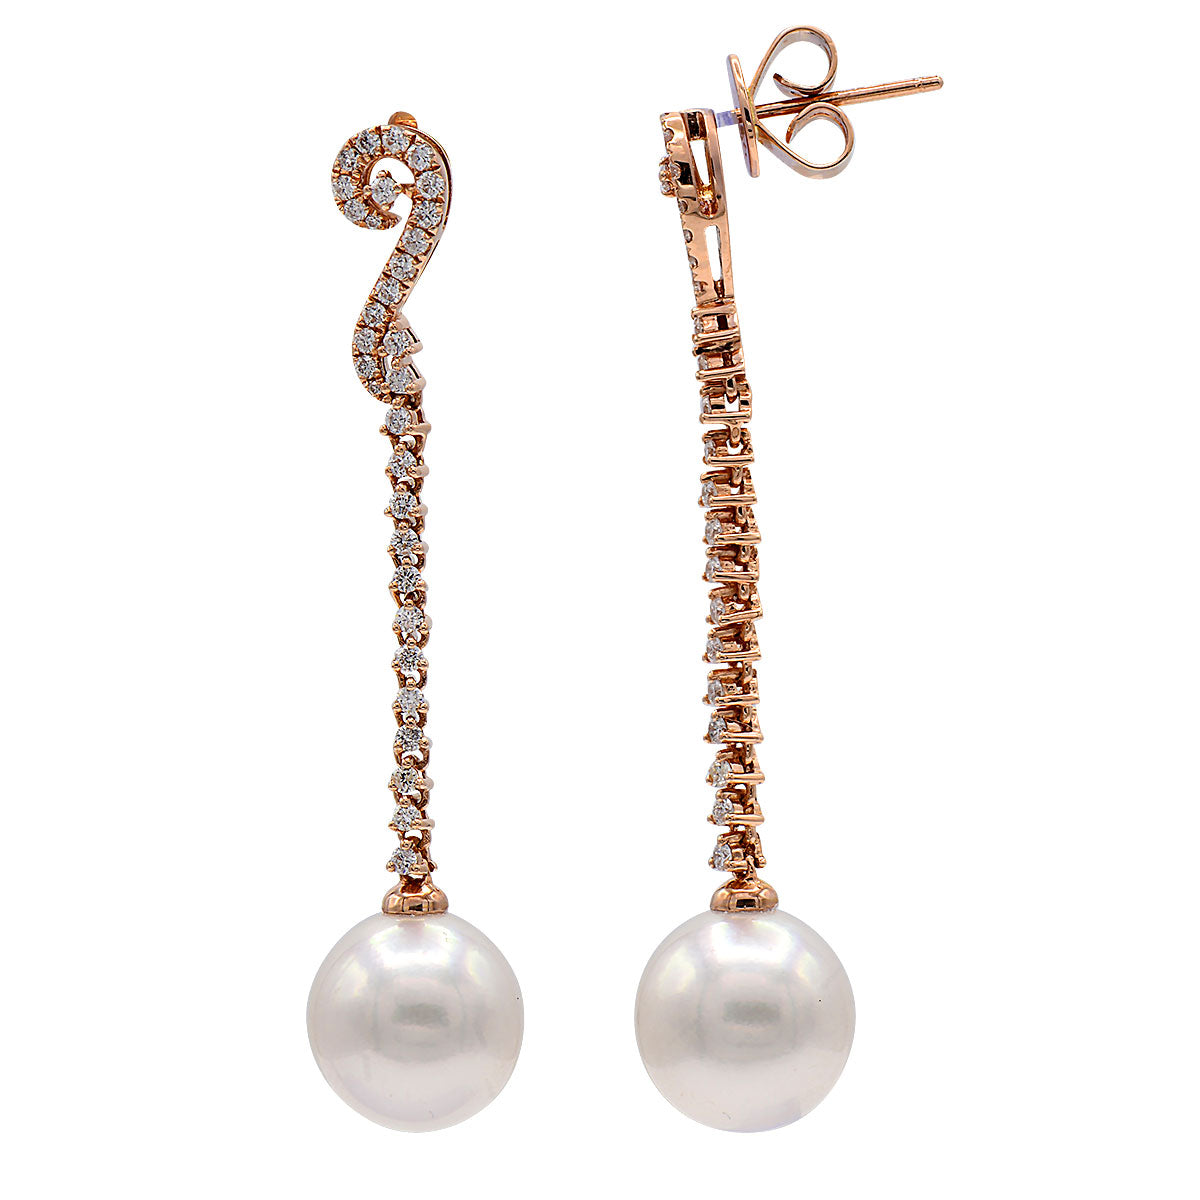 18KR White South Sea Pearl Earrings, 10-11mm